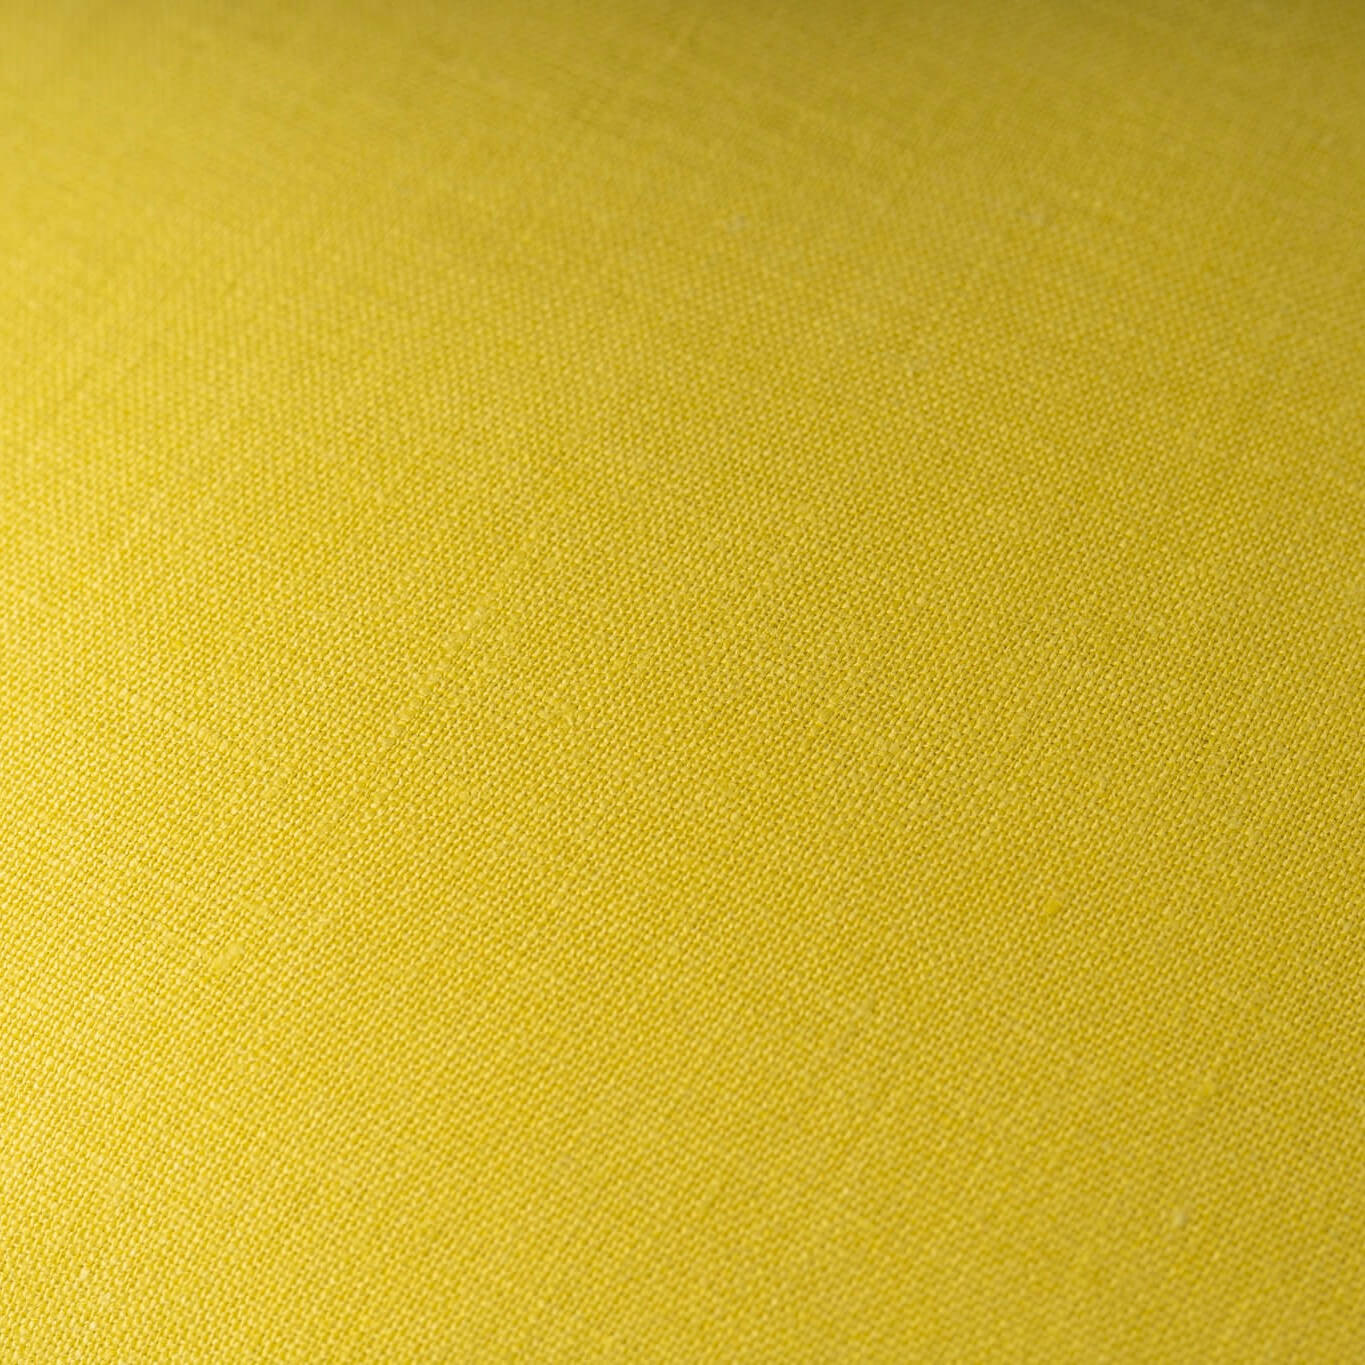 Lemon Yellow Linen Cushion Cover